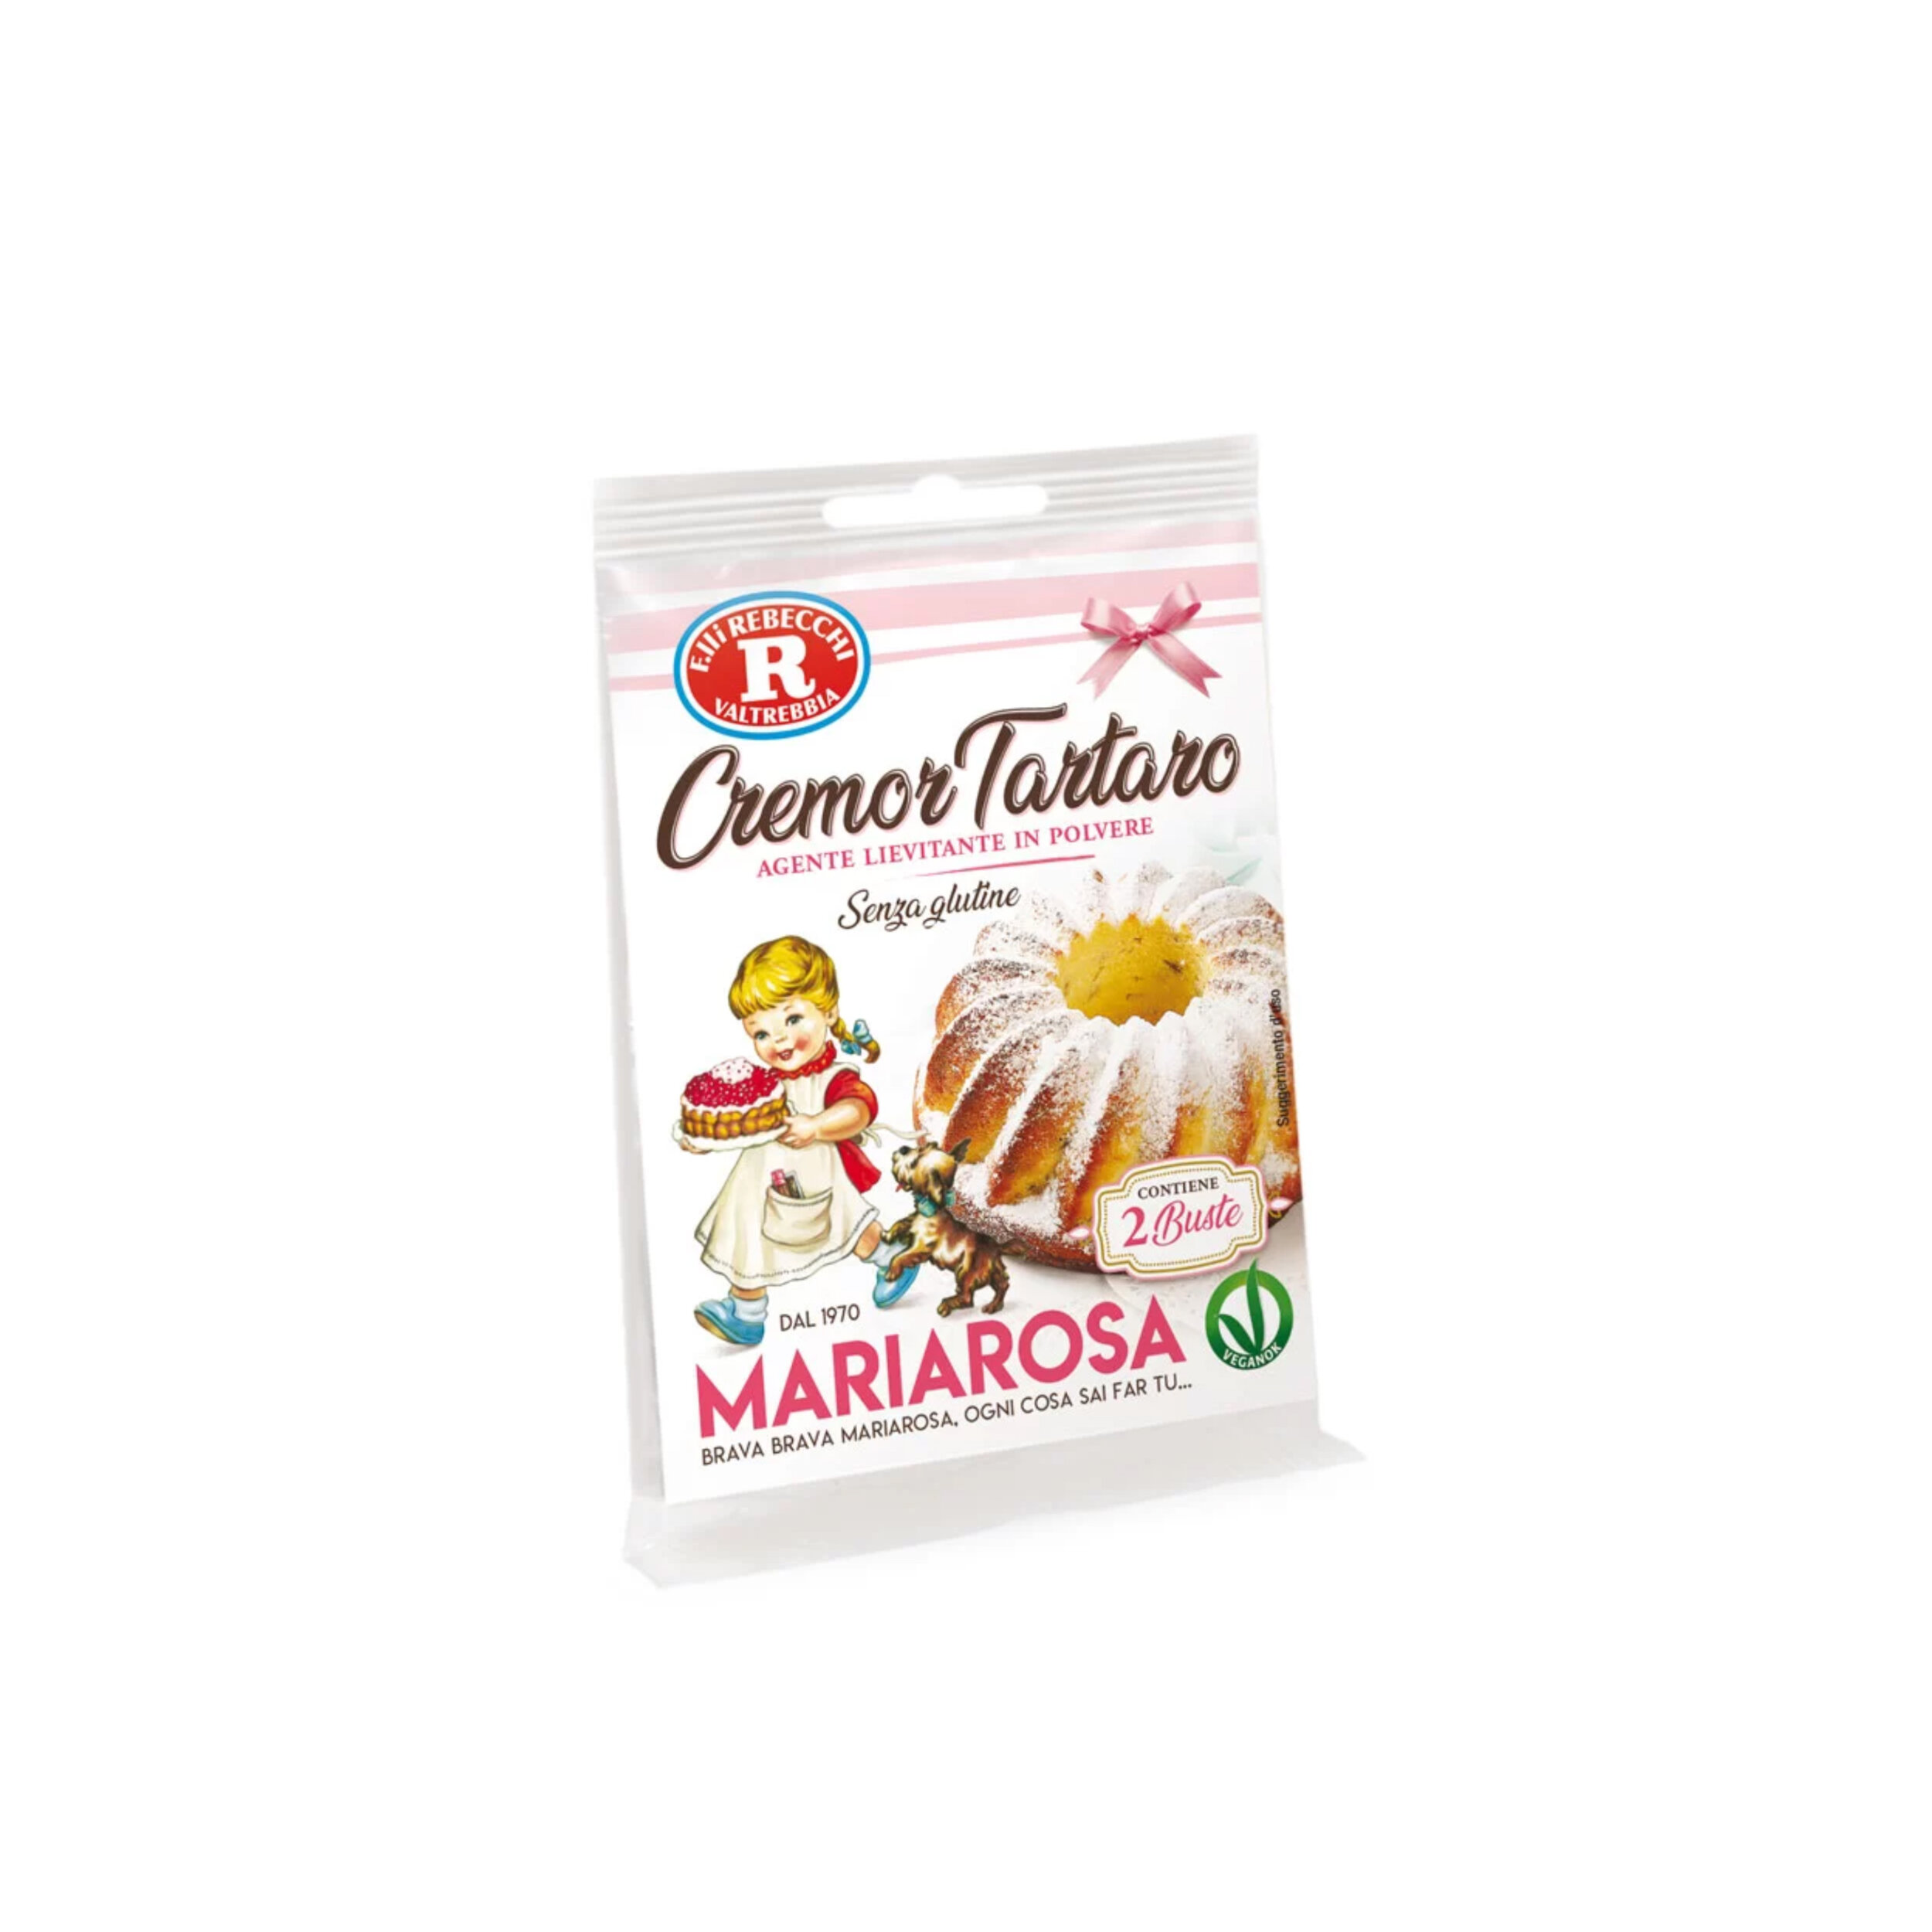 MA3271 Mariarosa Cream of Tartar.jpg